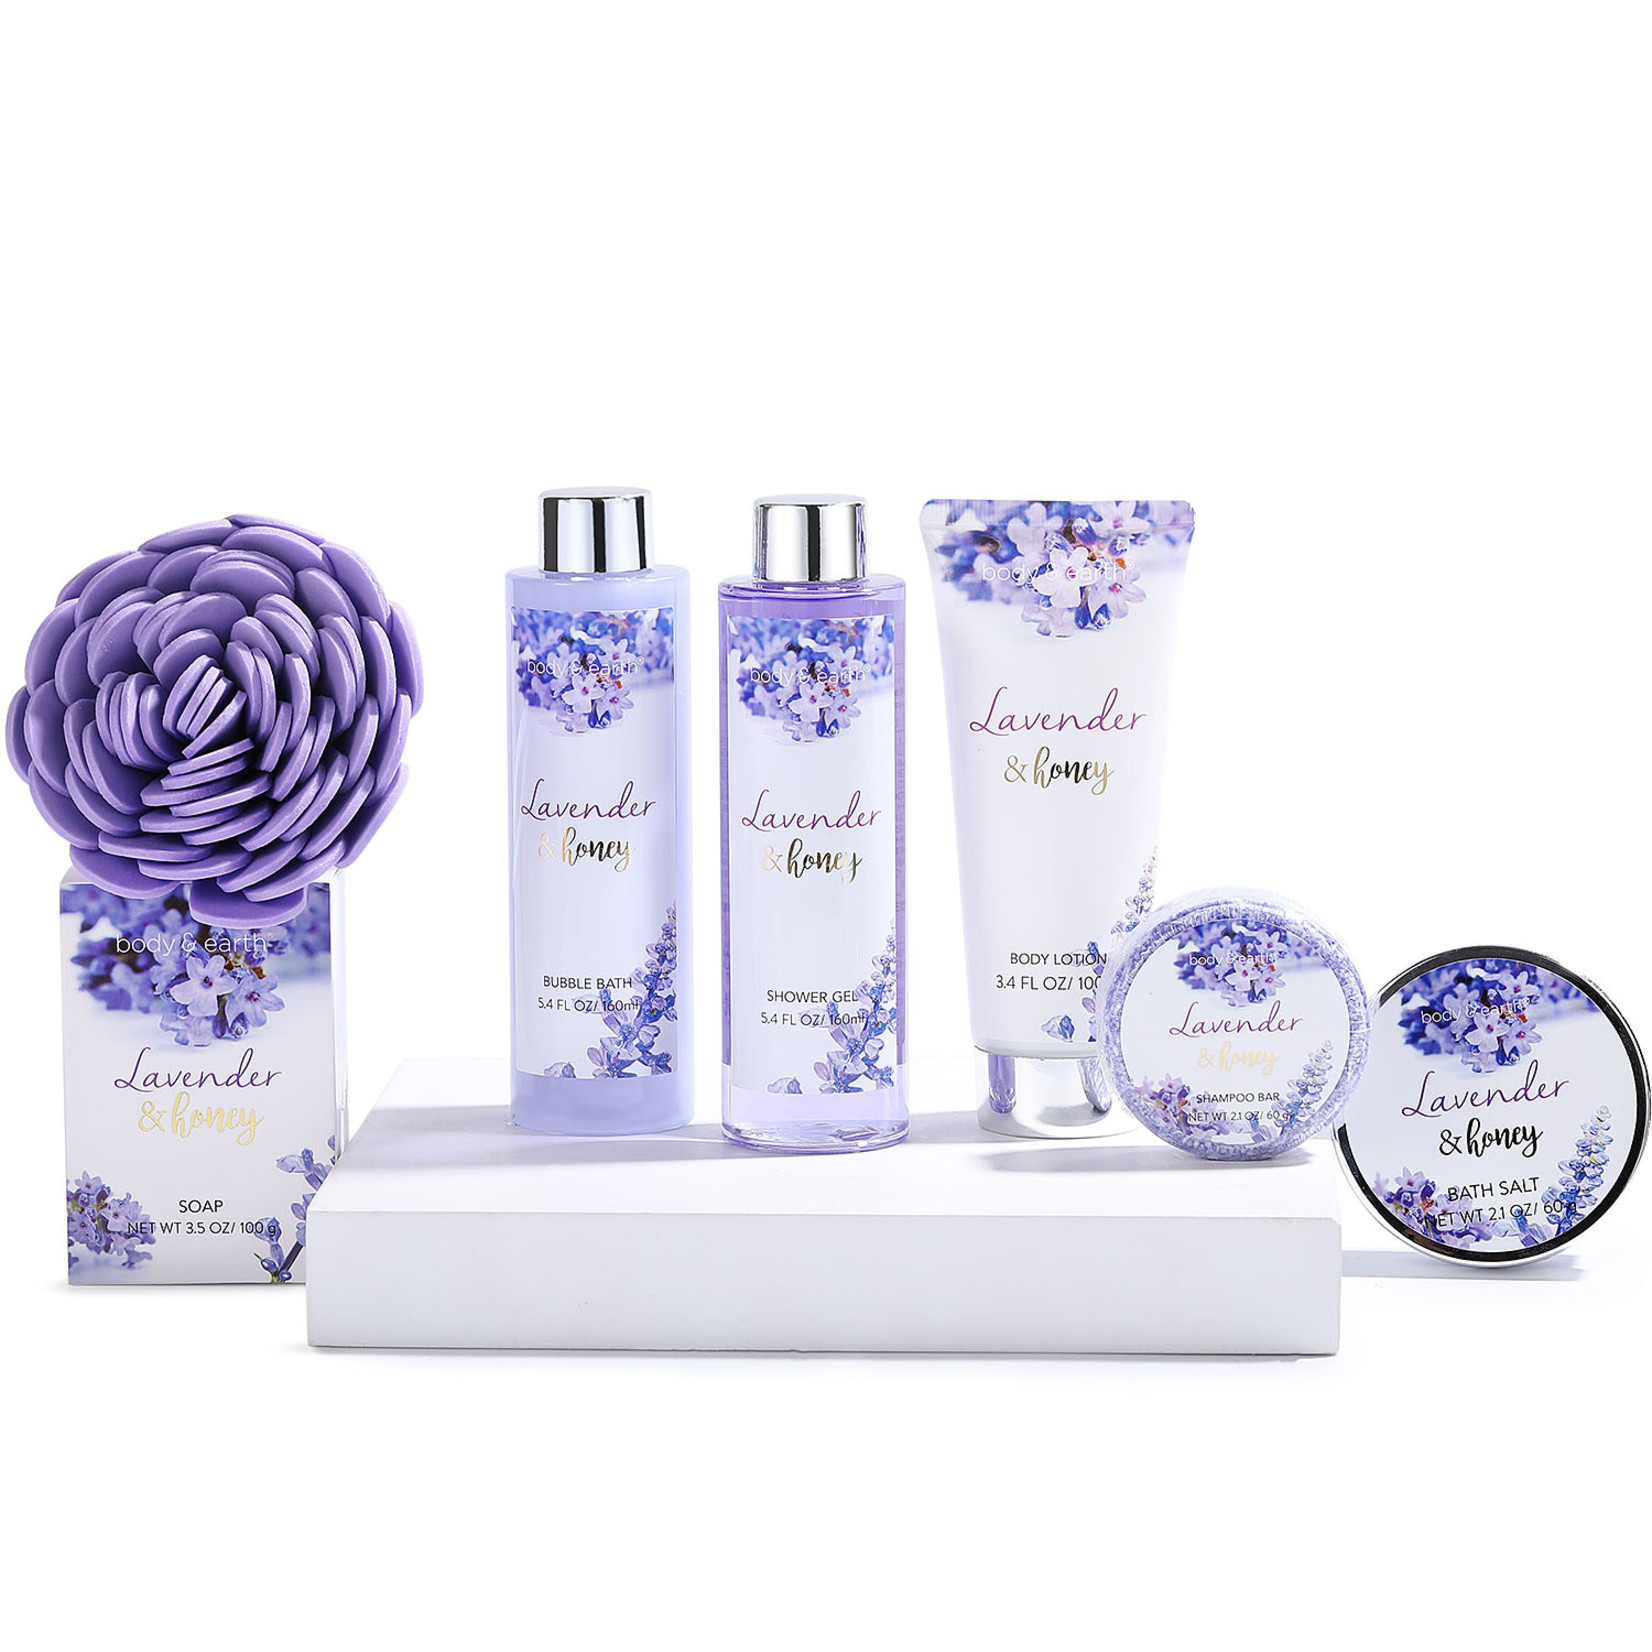 Body & Earth Geschenkset in witte badkuip - Lavendel & Honing - Bad cadeau